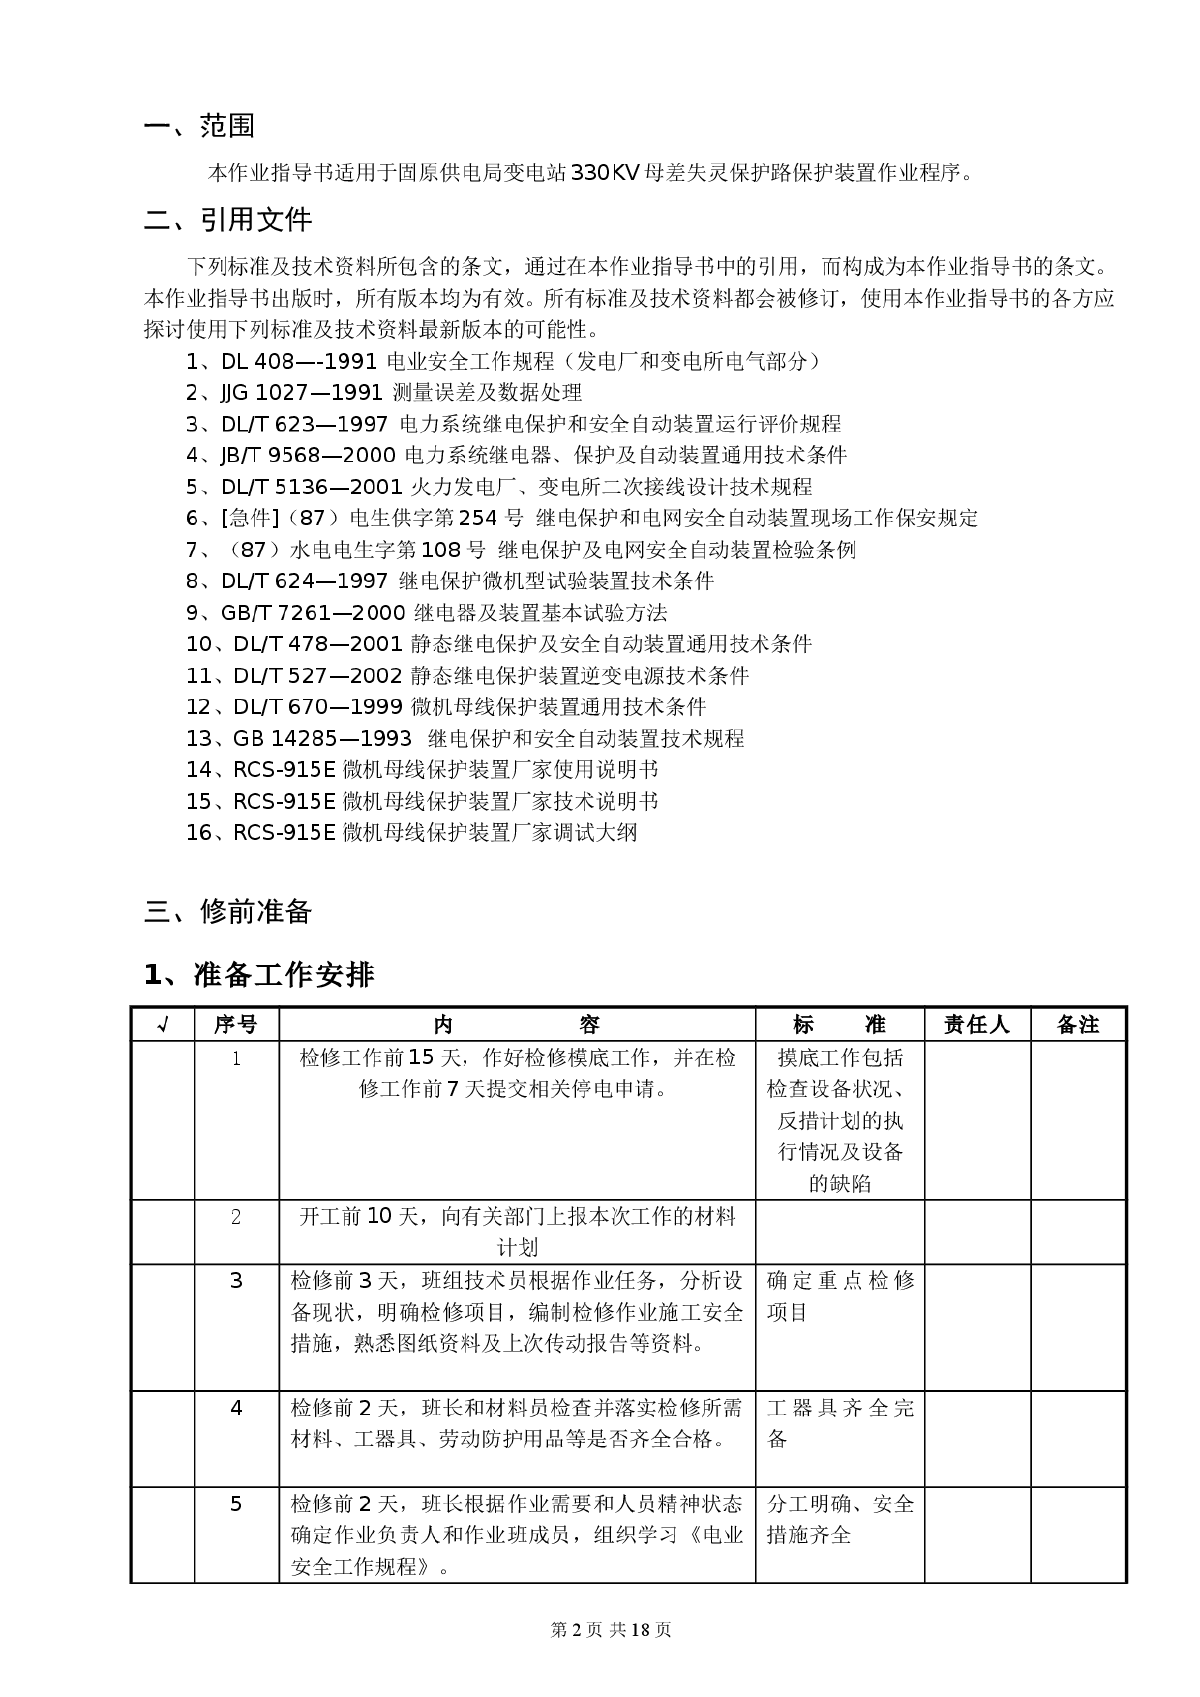 RCS-915E微机母线保护定检作业指导书-图二